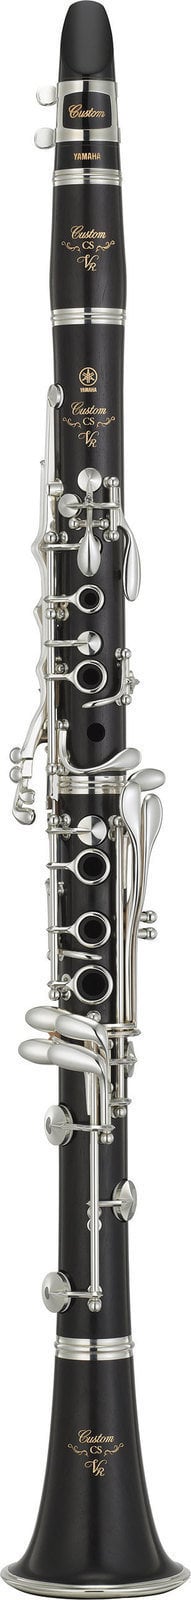 A Clarinet Yamaha YCL CSVR A A Clarinet